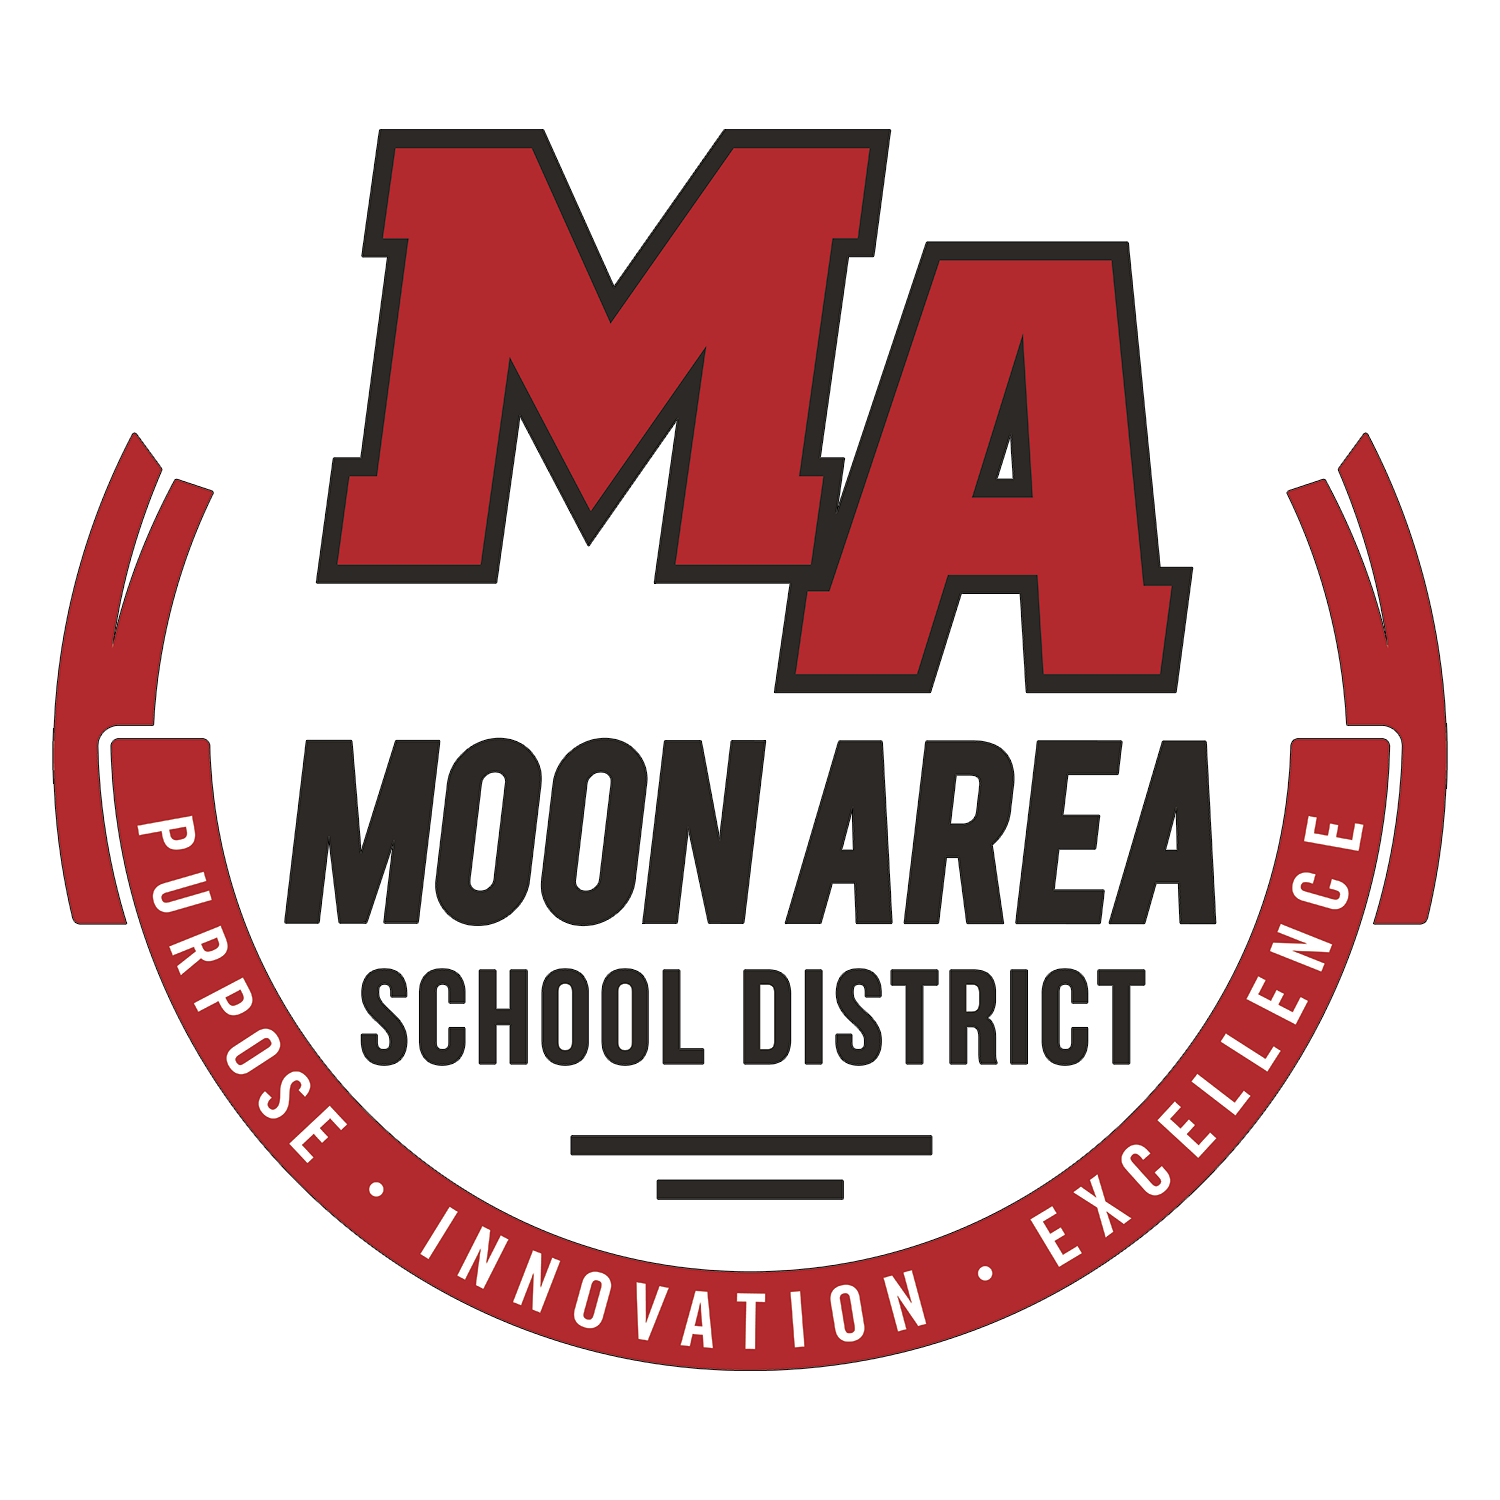 Moon Area School District logo